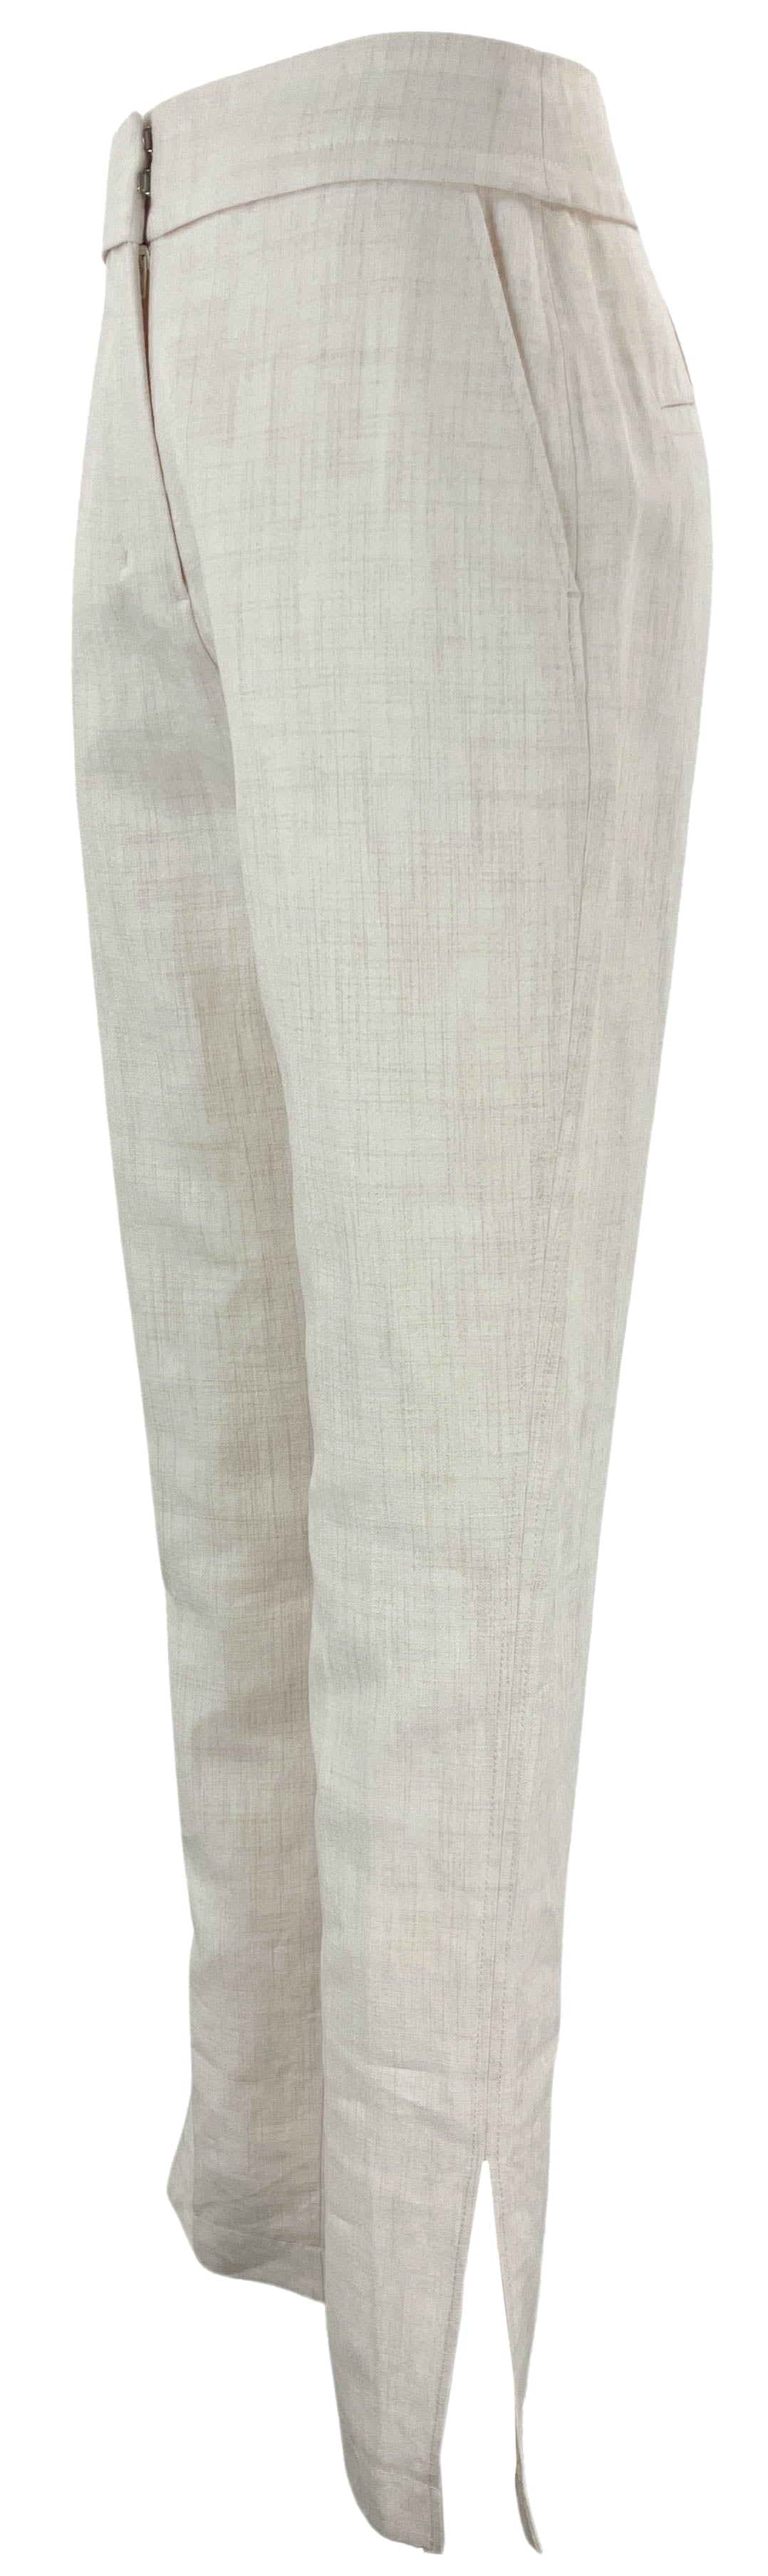 Jacquemus Le Pantalon Tibau Trousers in Cream - Discounts on Jacquemus at UAL